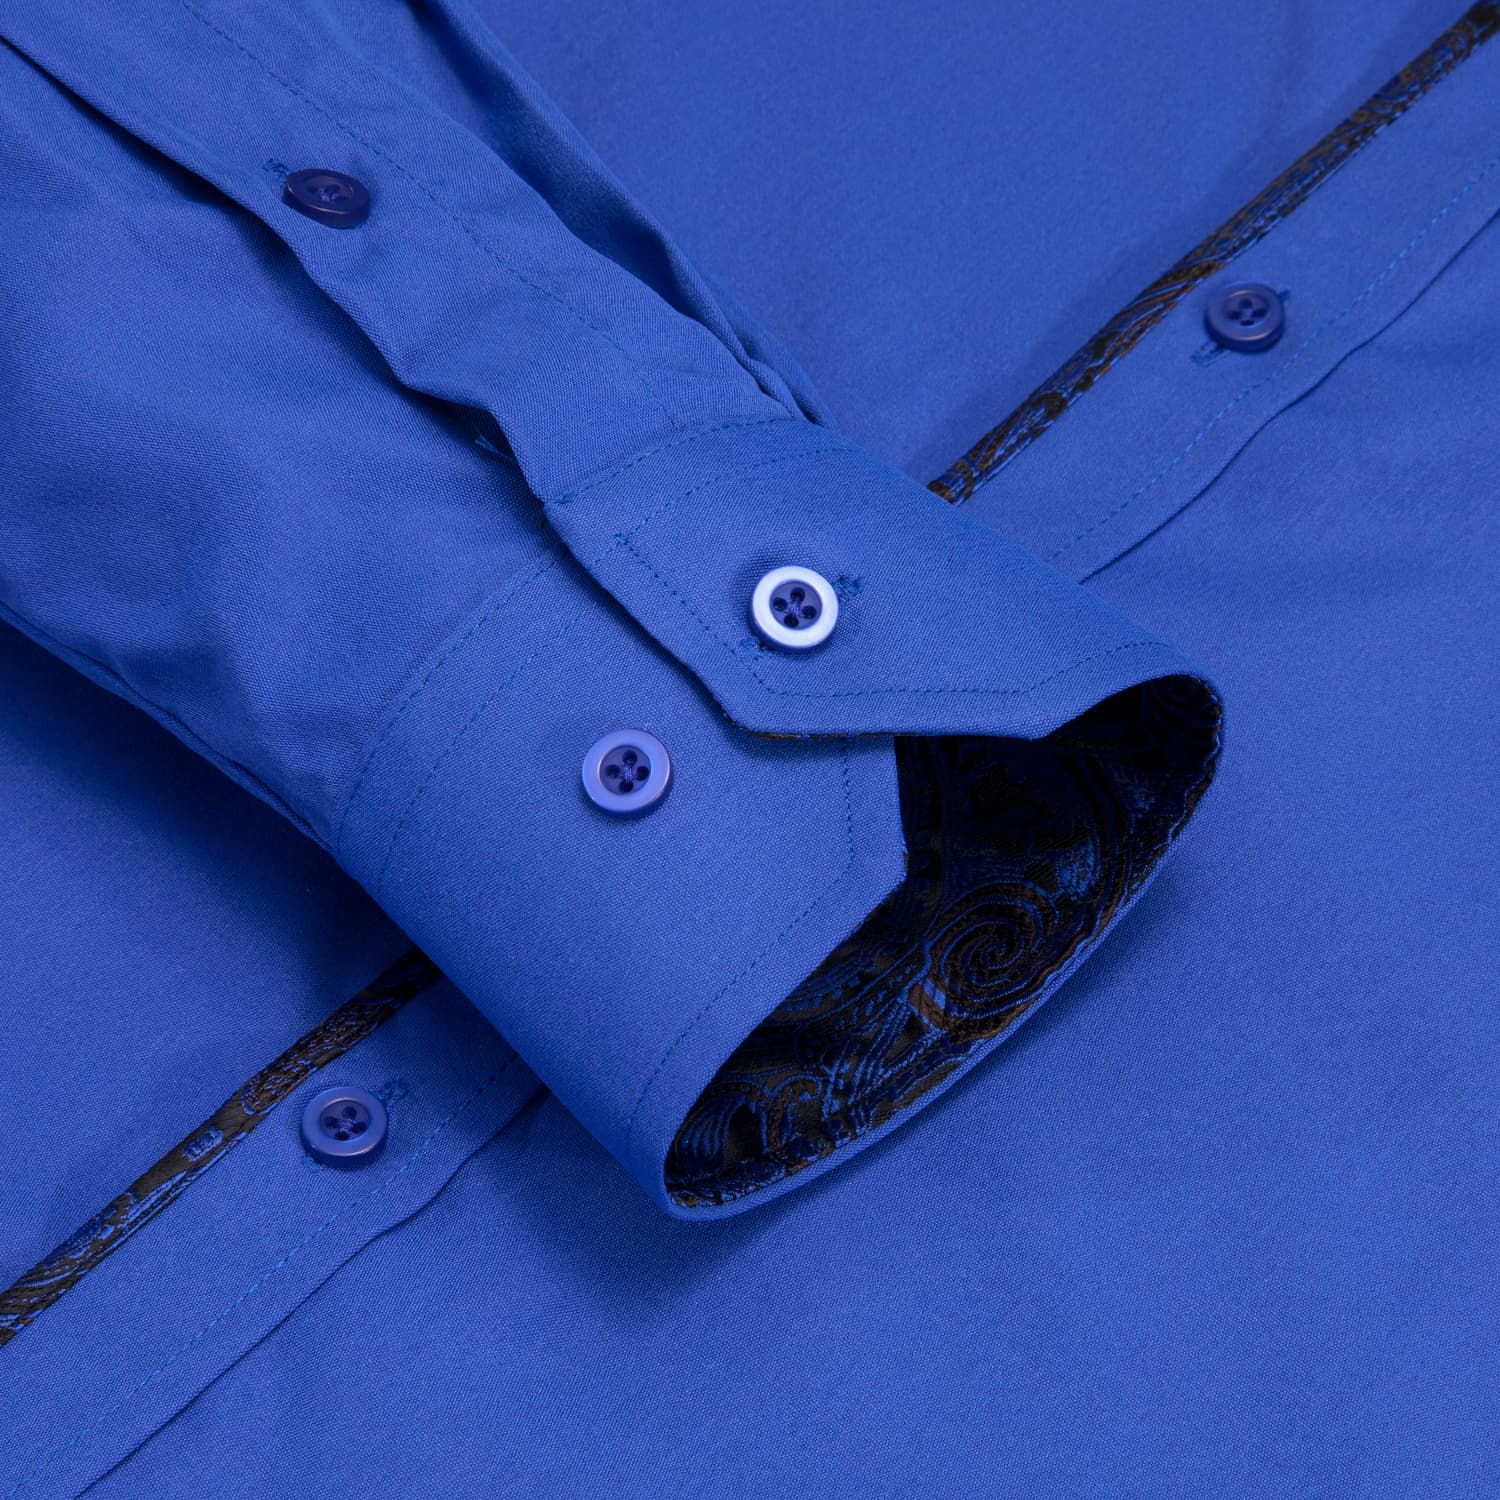 Hi-Tie Button Down Shirt Solid RoyalBlue Shirt with Black Jacquard Collar